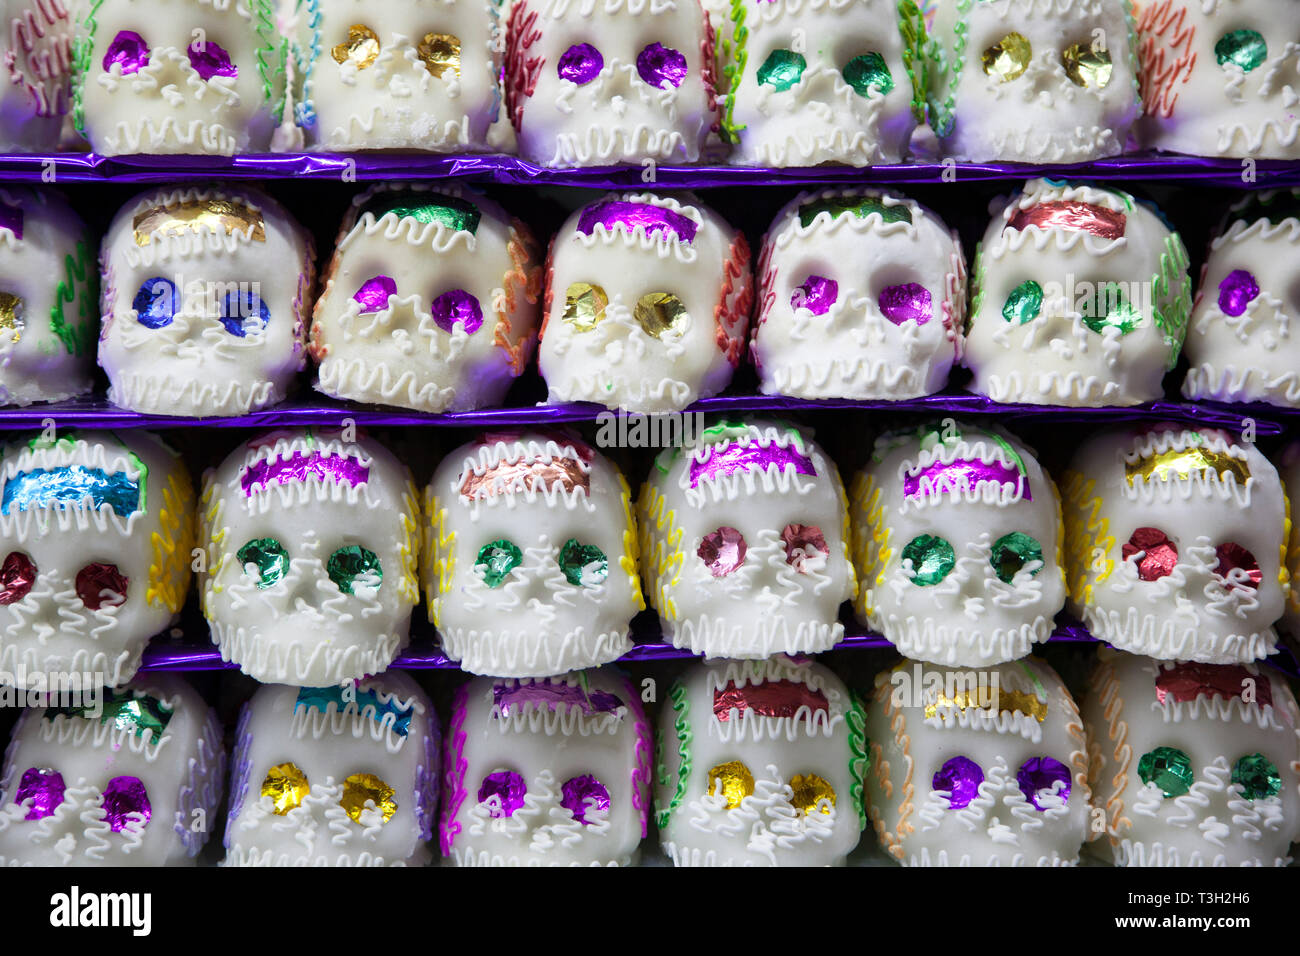 A calavera, an edible skull made of sugar made throughout Mexico to celebrate the Day of the Dead, or Dia de los Muertos. Stock Photo